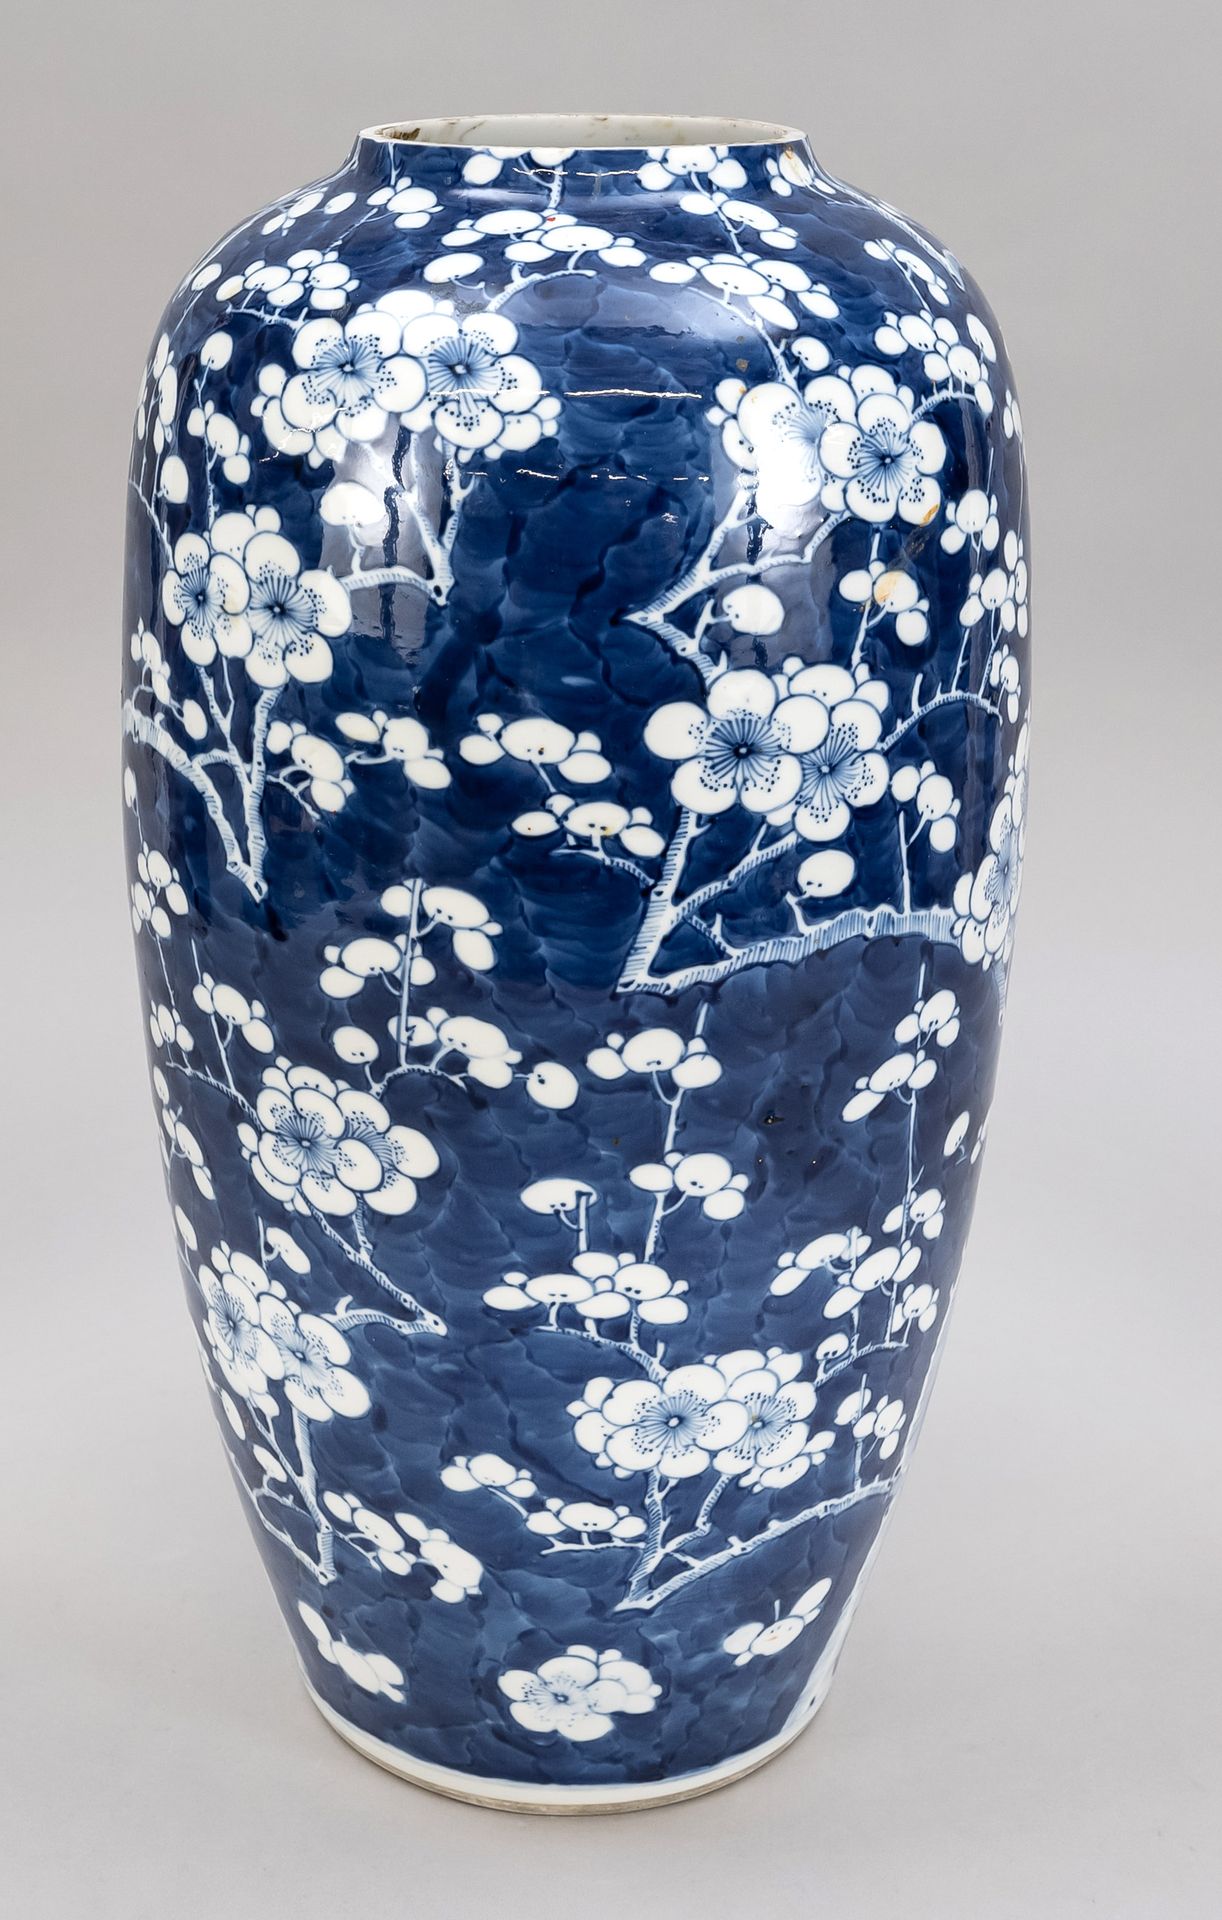 Null Vase with prunus decoration, China, 17th/18th century (Kangxi/Qing). Circum&hellip;